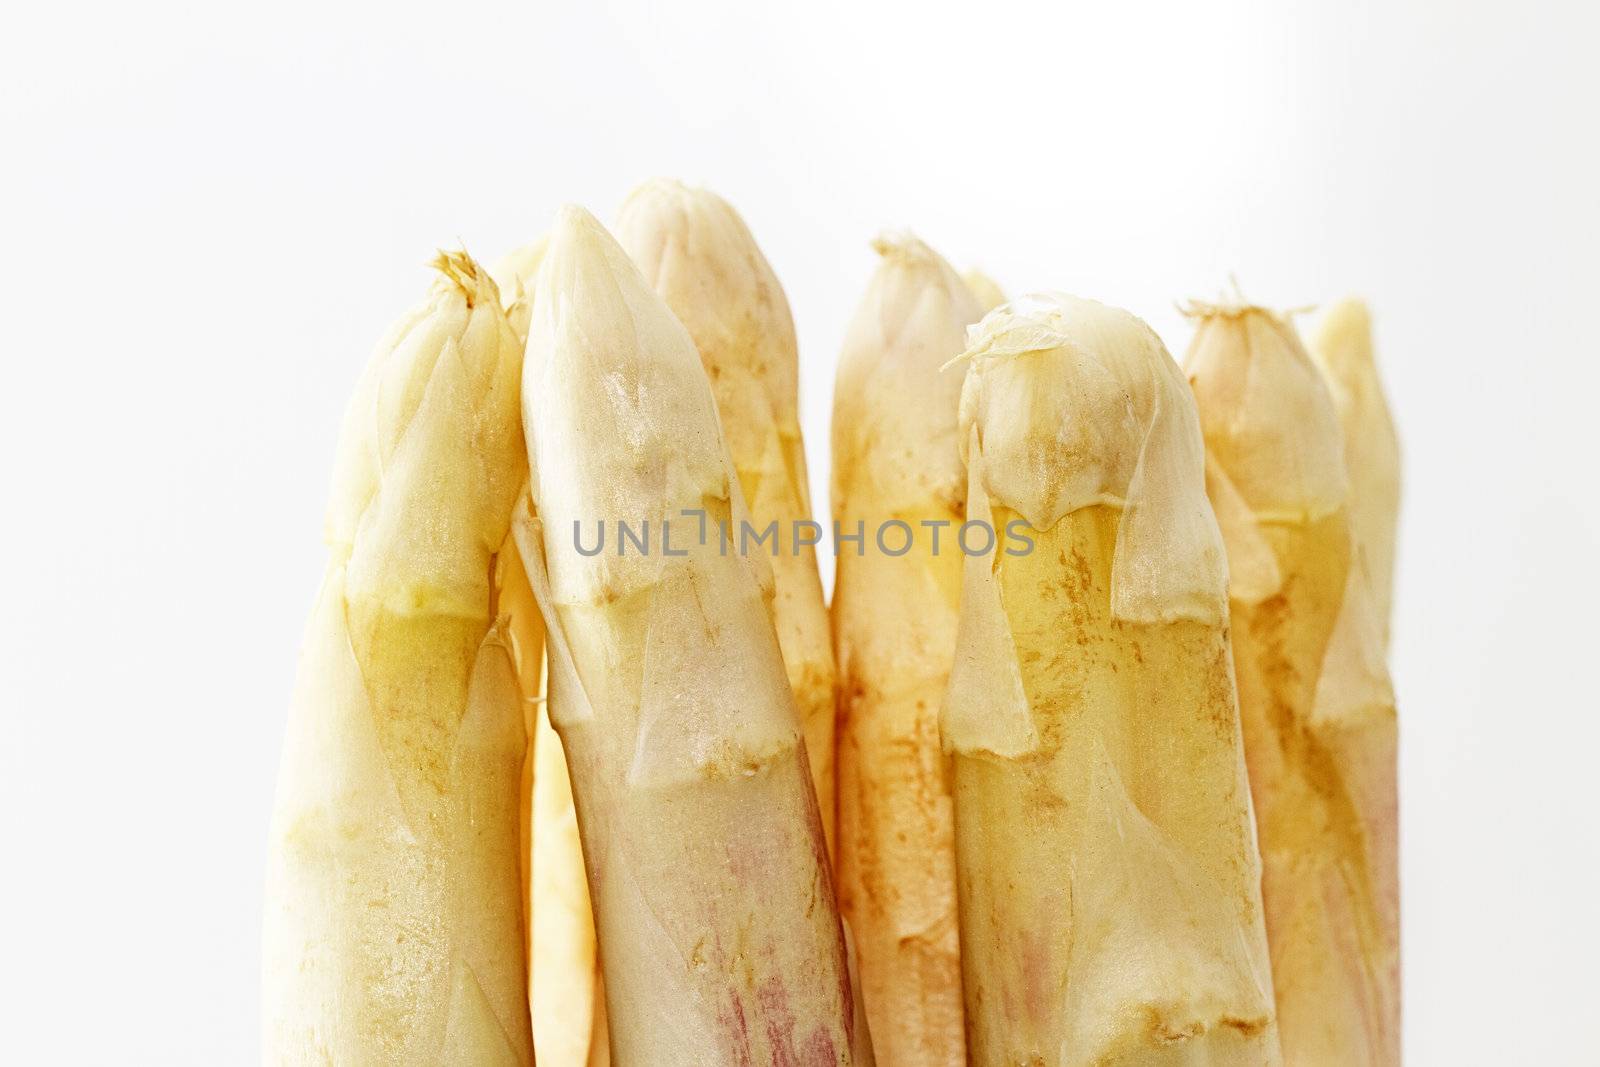 some tips of white asparagus on white background